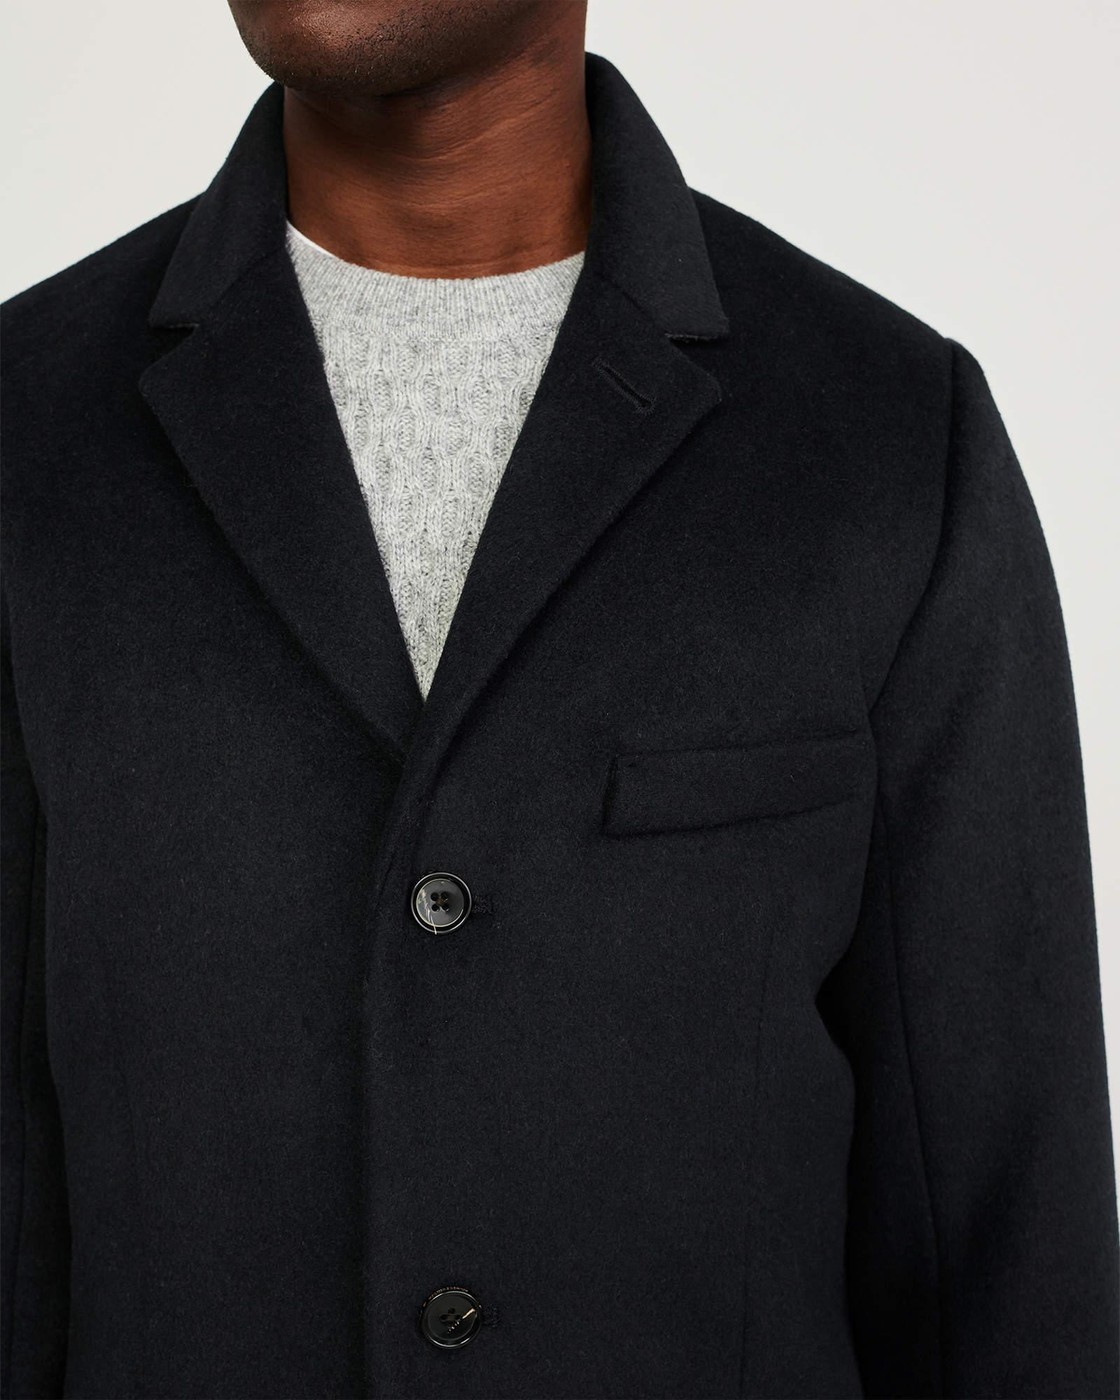 Пальто мужское демисезонное - пальто Abercrombie & Fitch, XL, XL